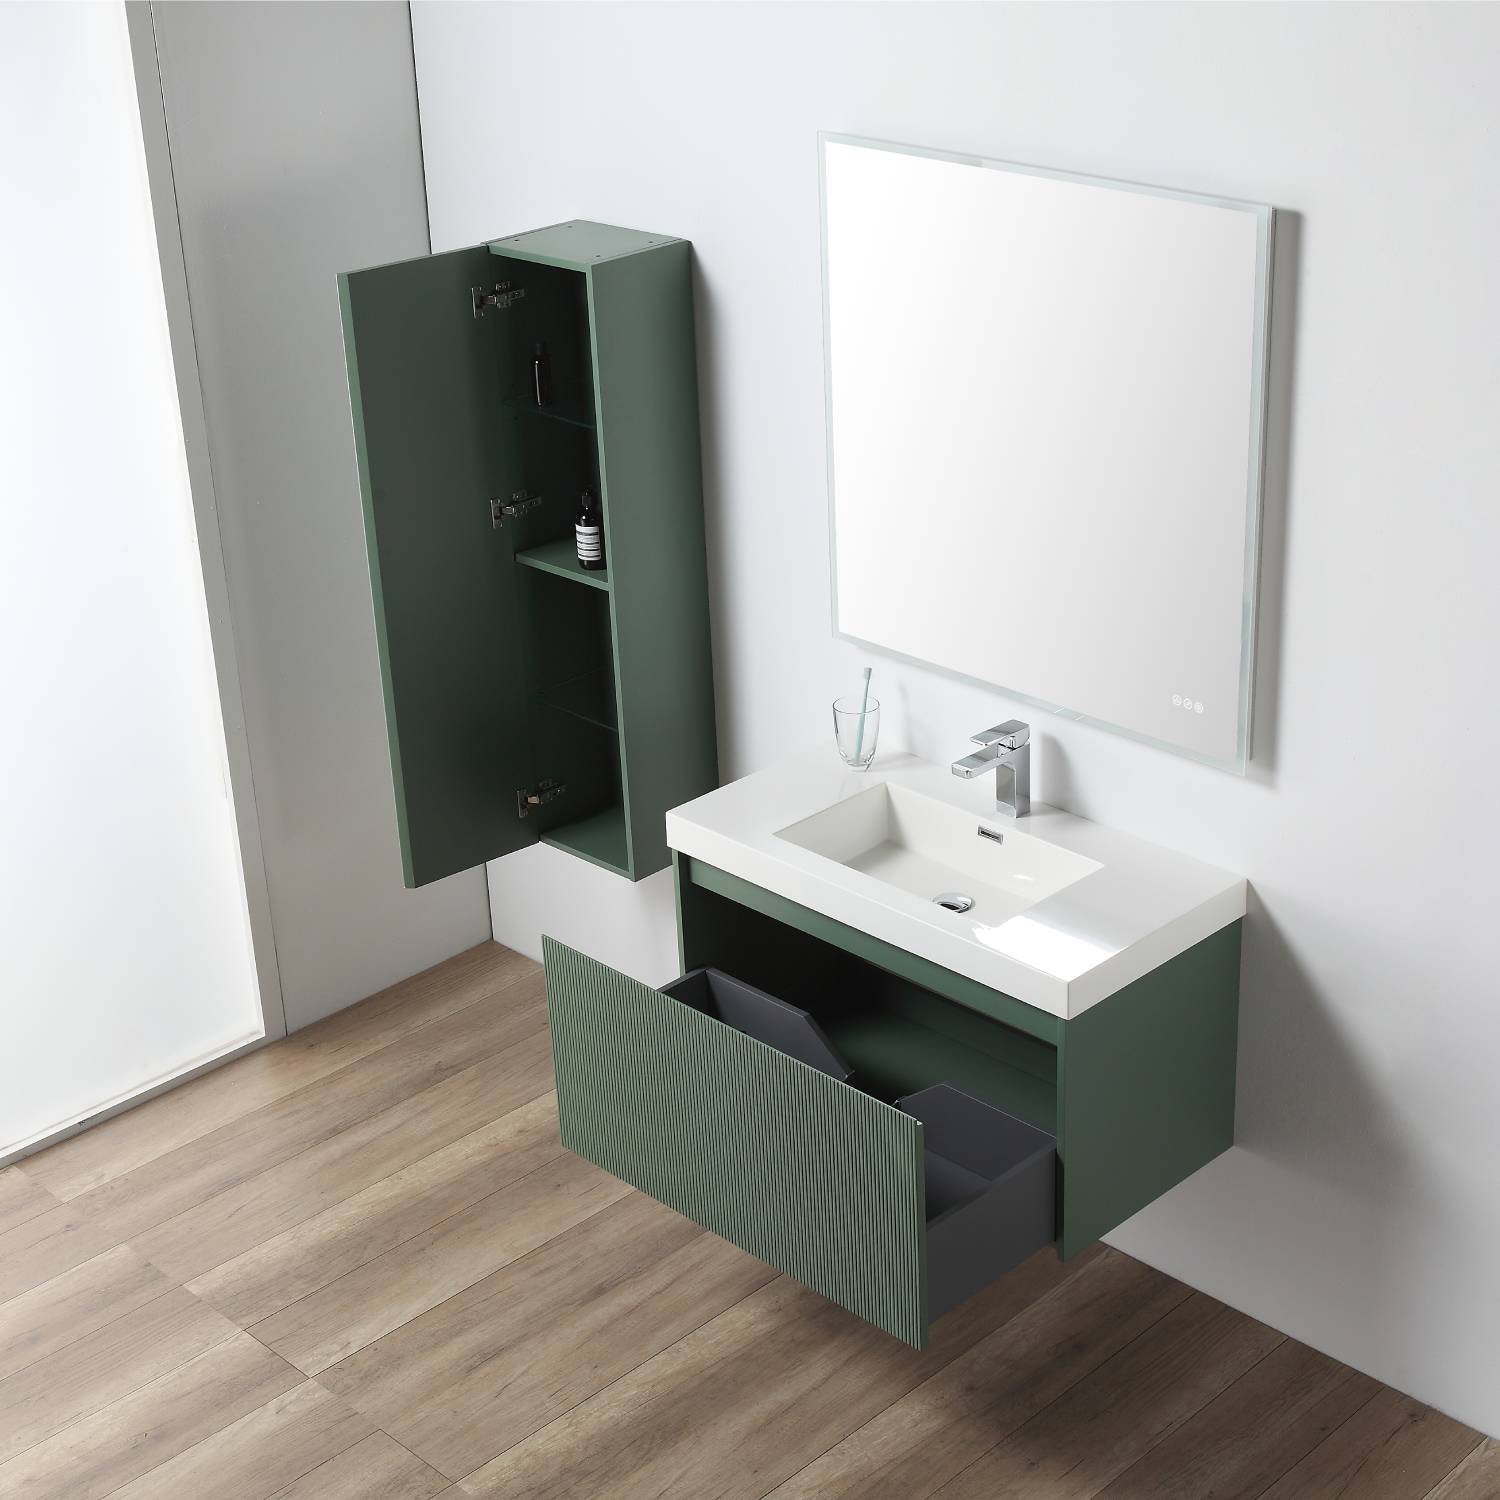 Positano 36" Bathroom Vanity  #size_36"  #color_aventurine green